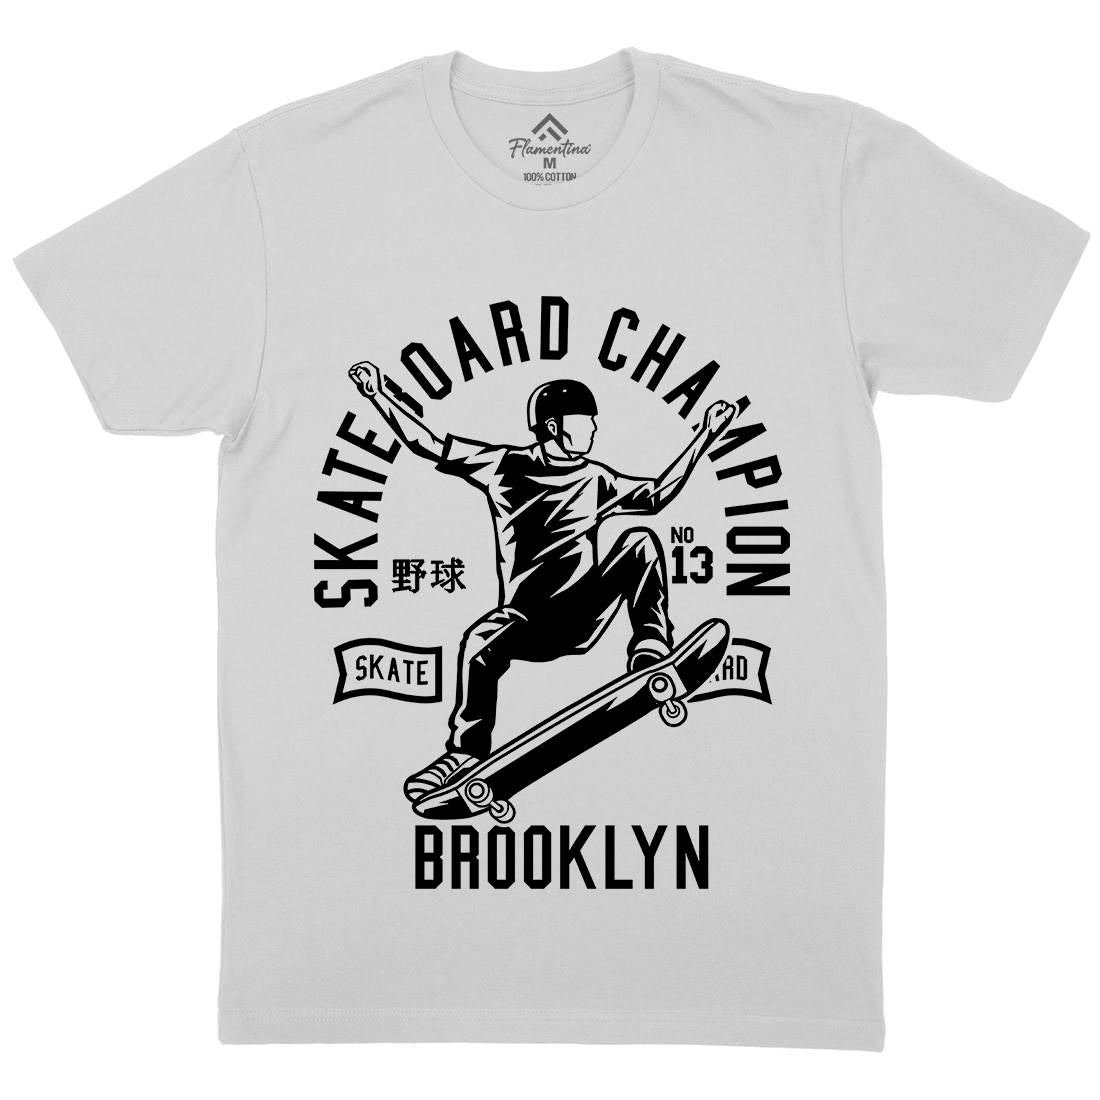 Skateboard Champion Mens Crew Neck T-Shirt Skate B622